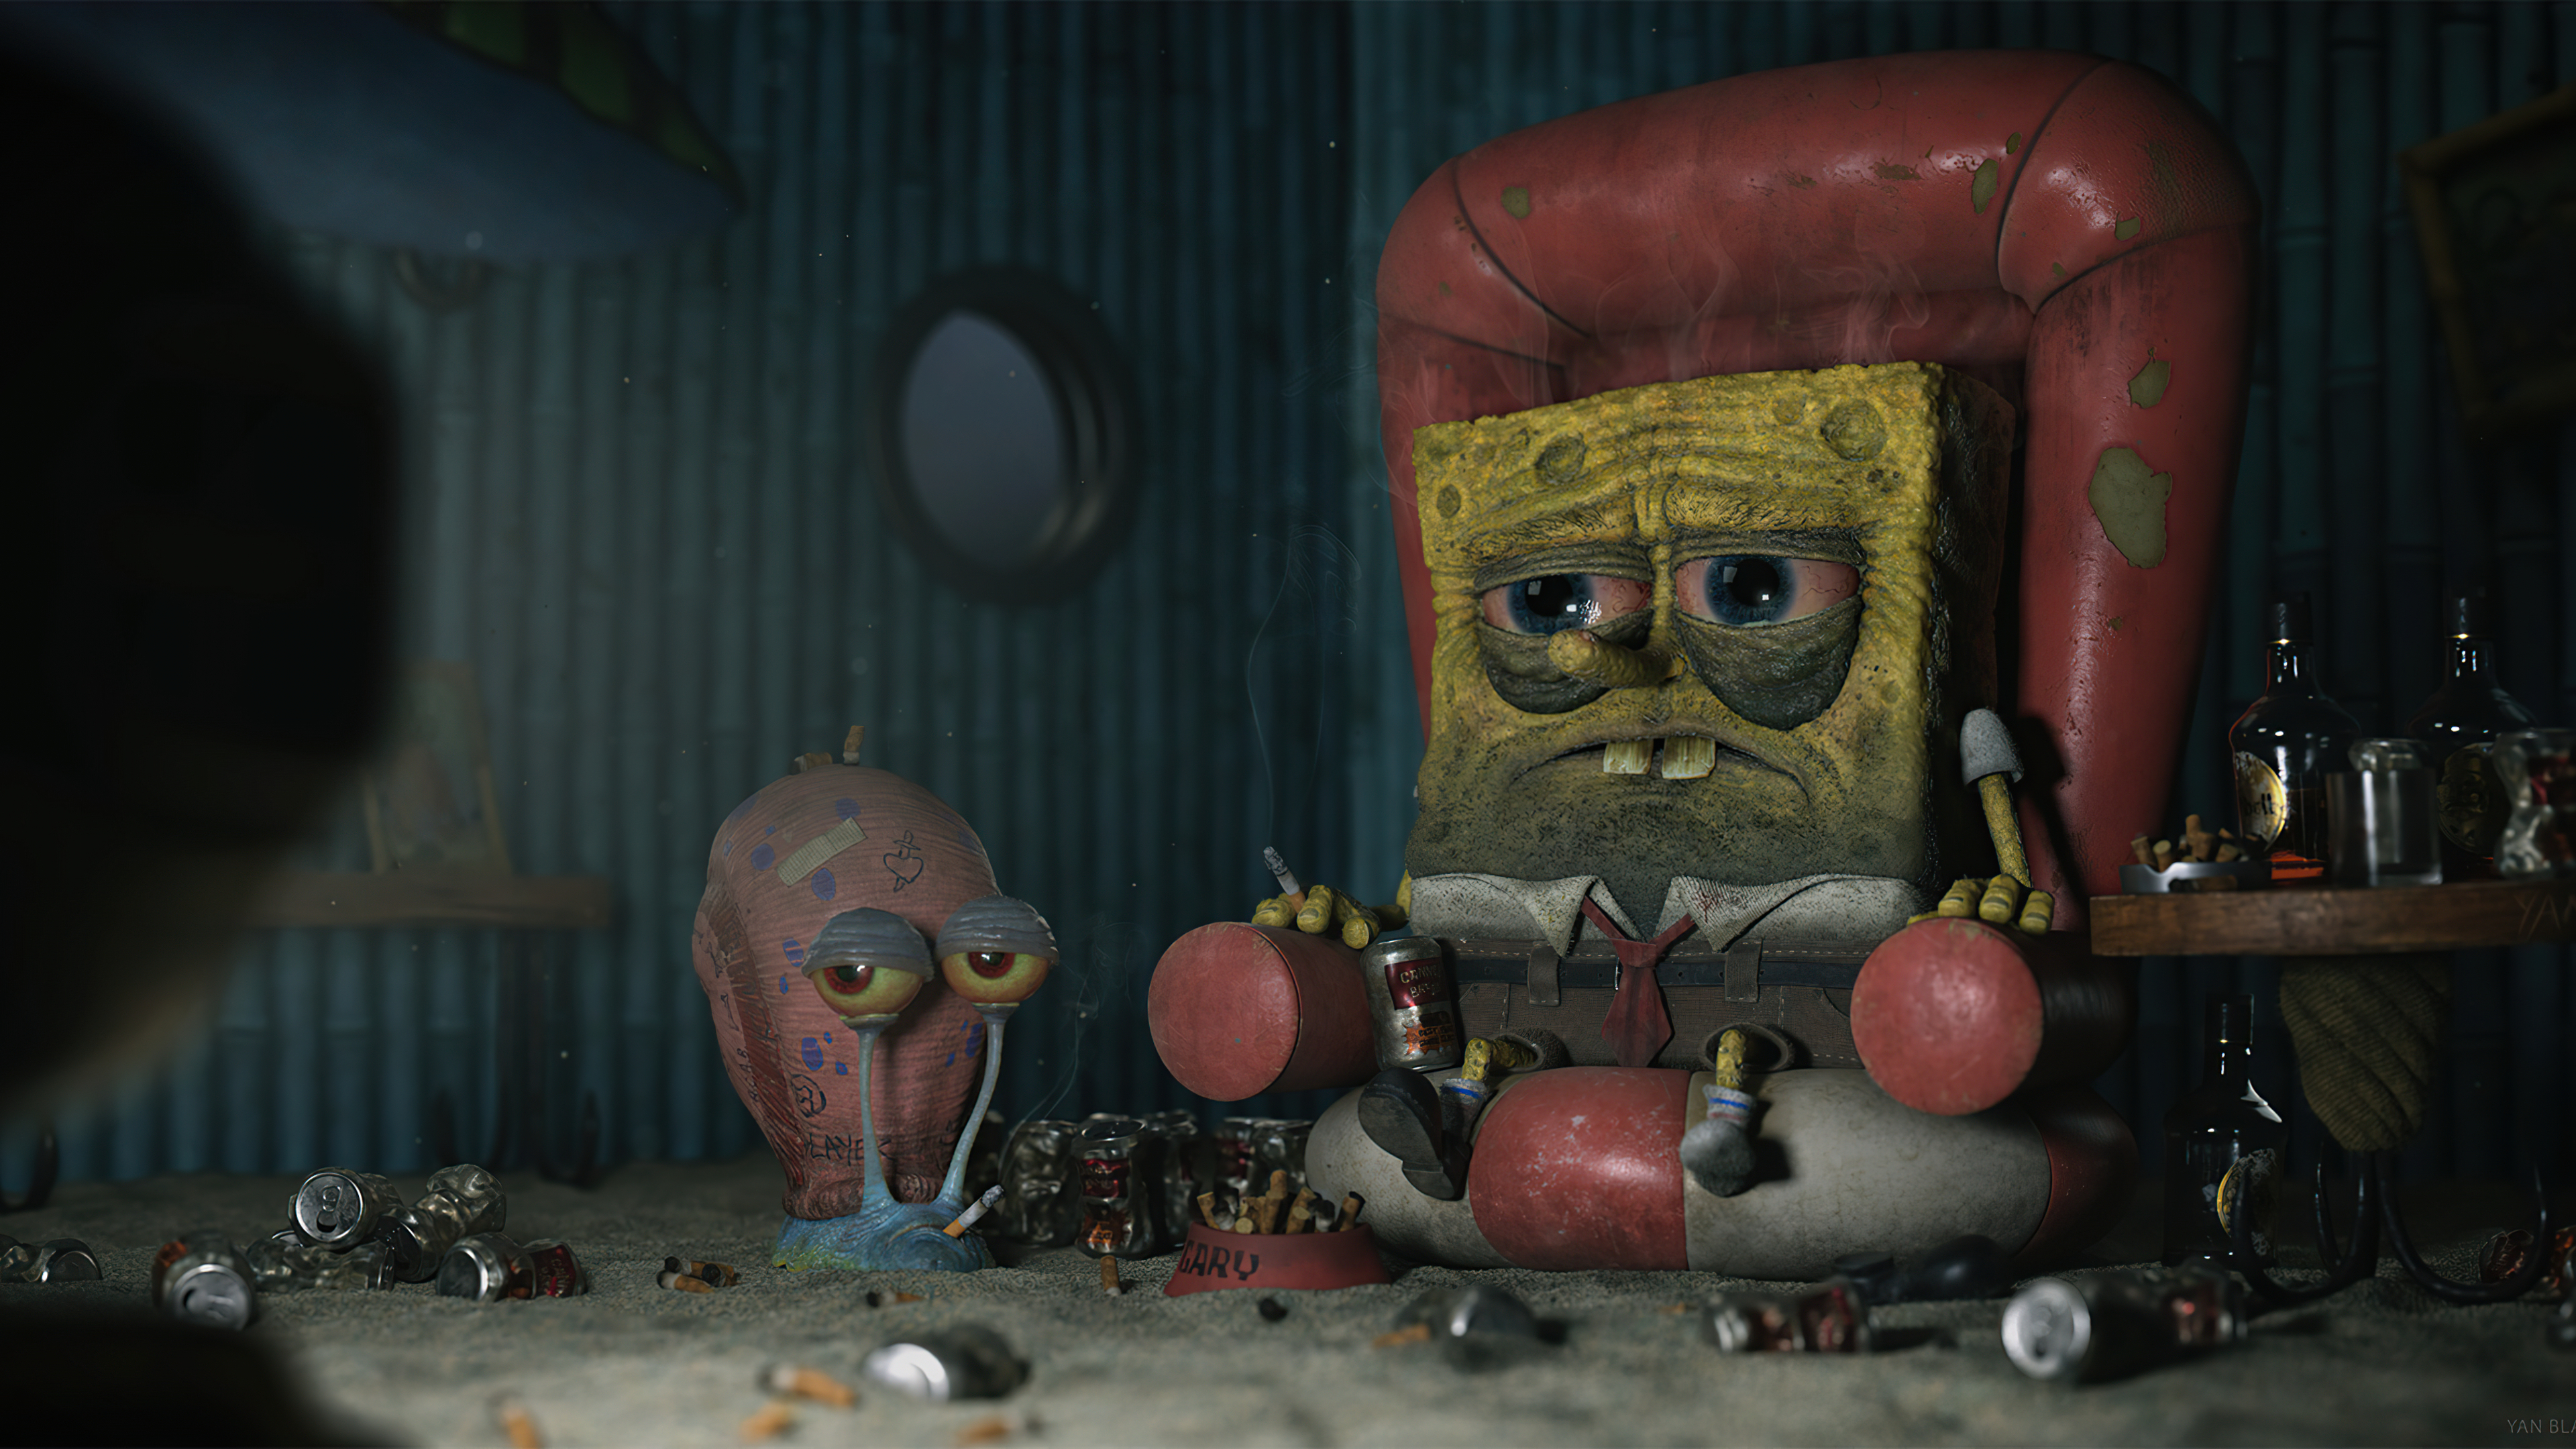 realistic spongebob